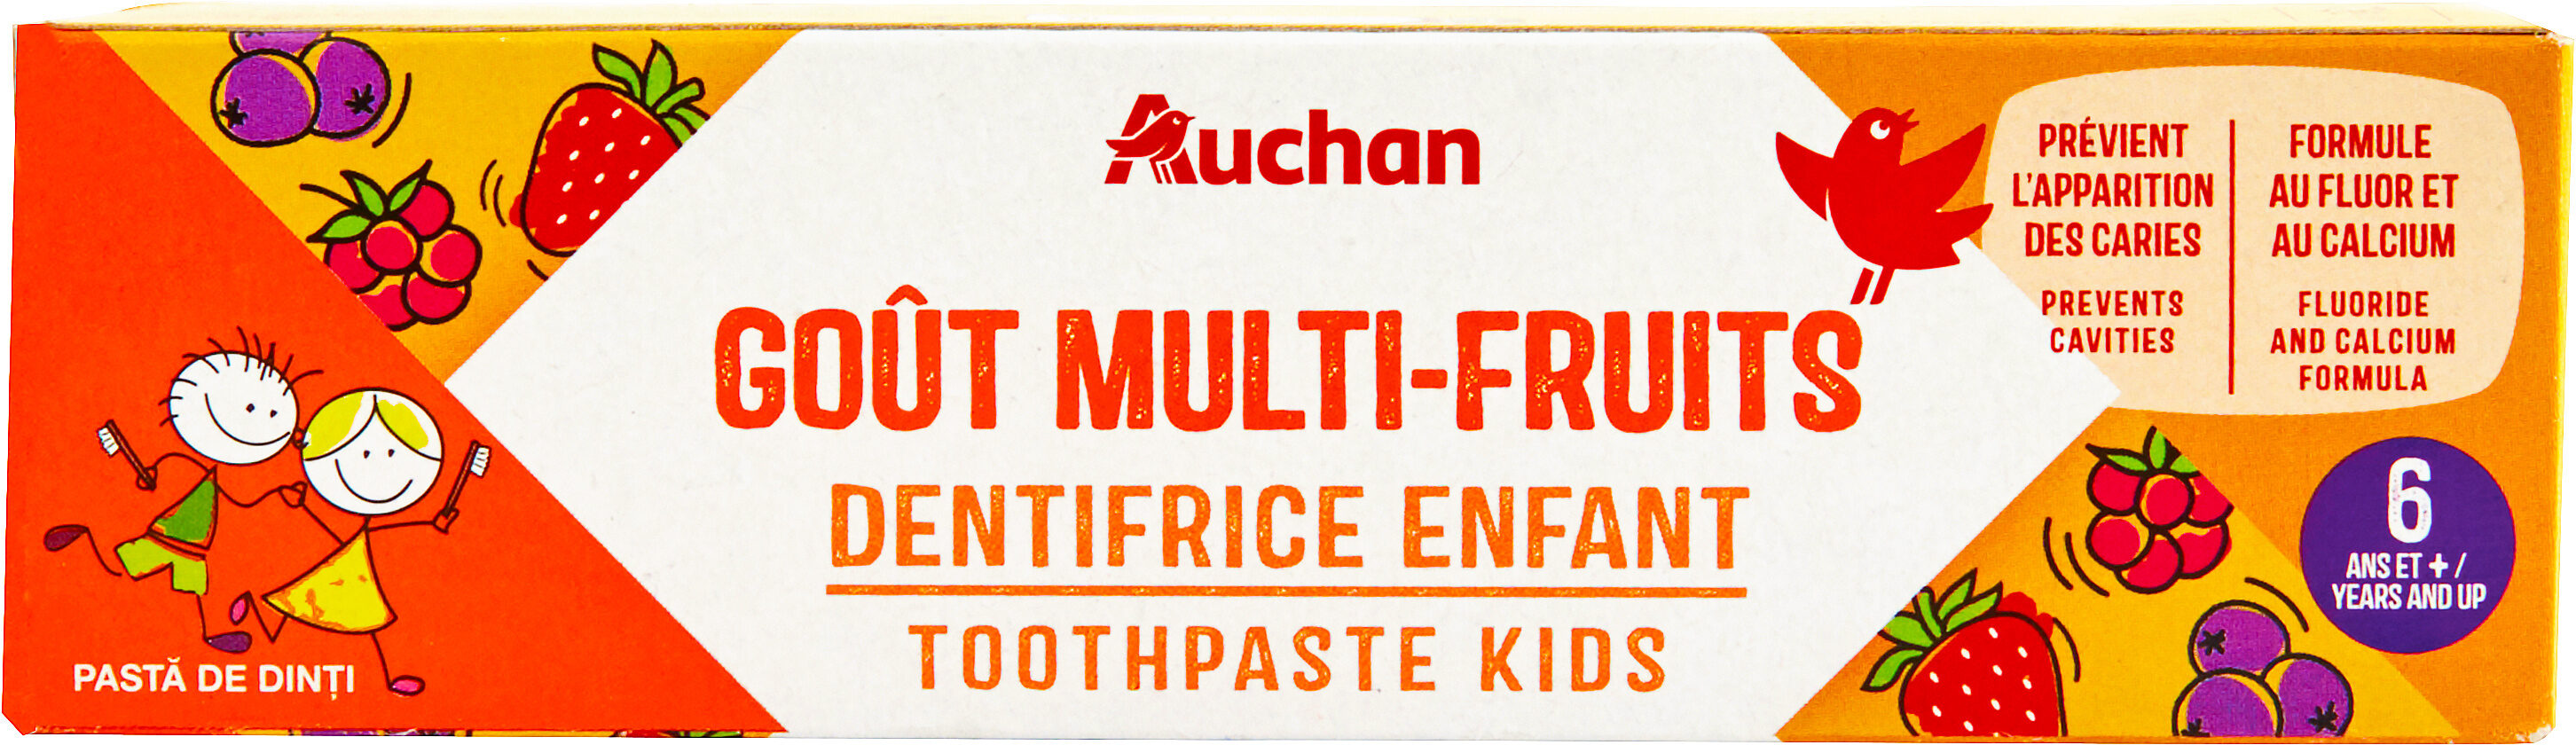 Dentifrice enfant multi-fruits 6 ans et + - Produkto - fr